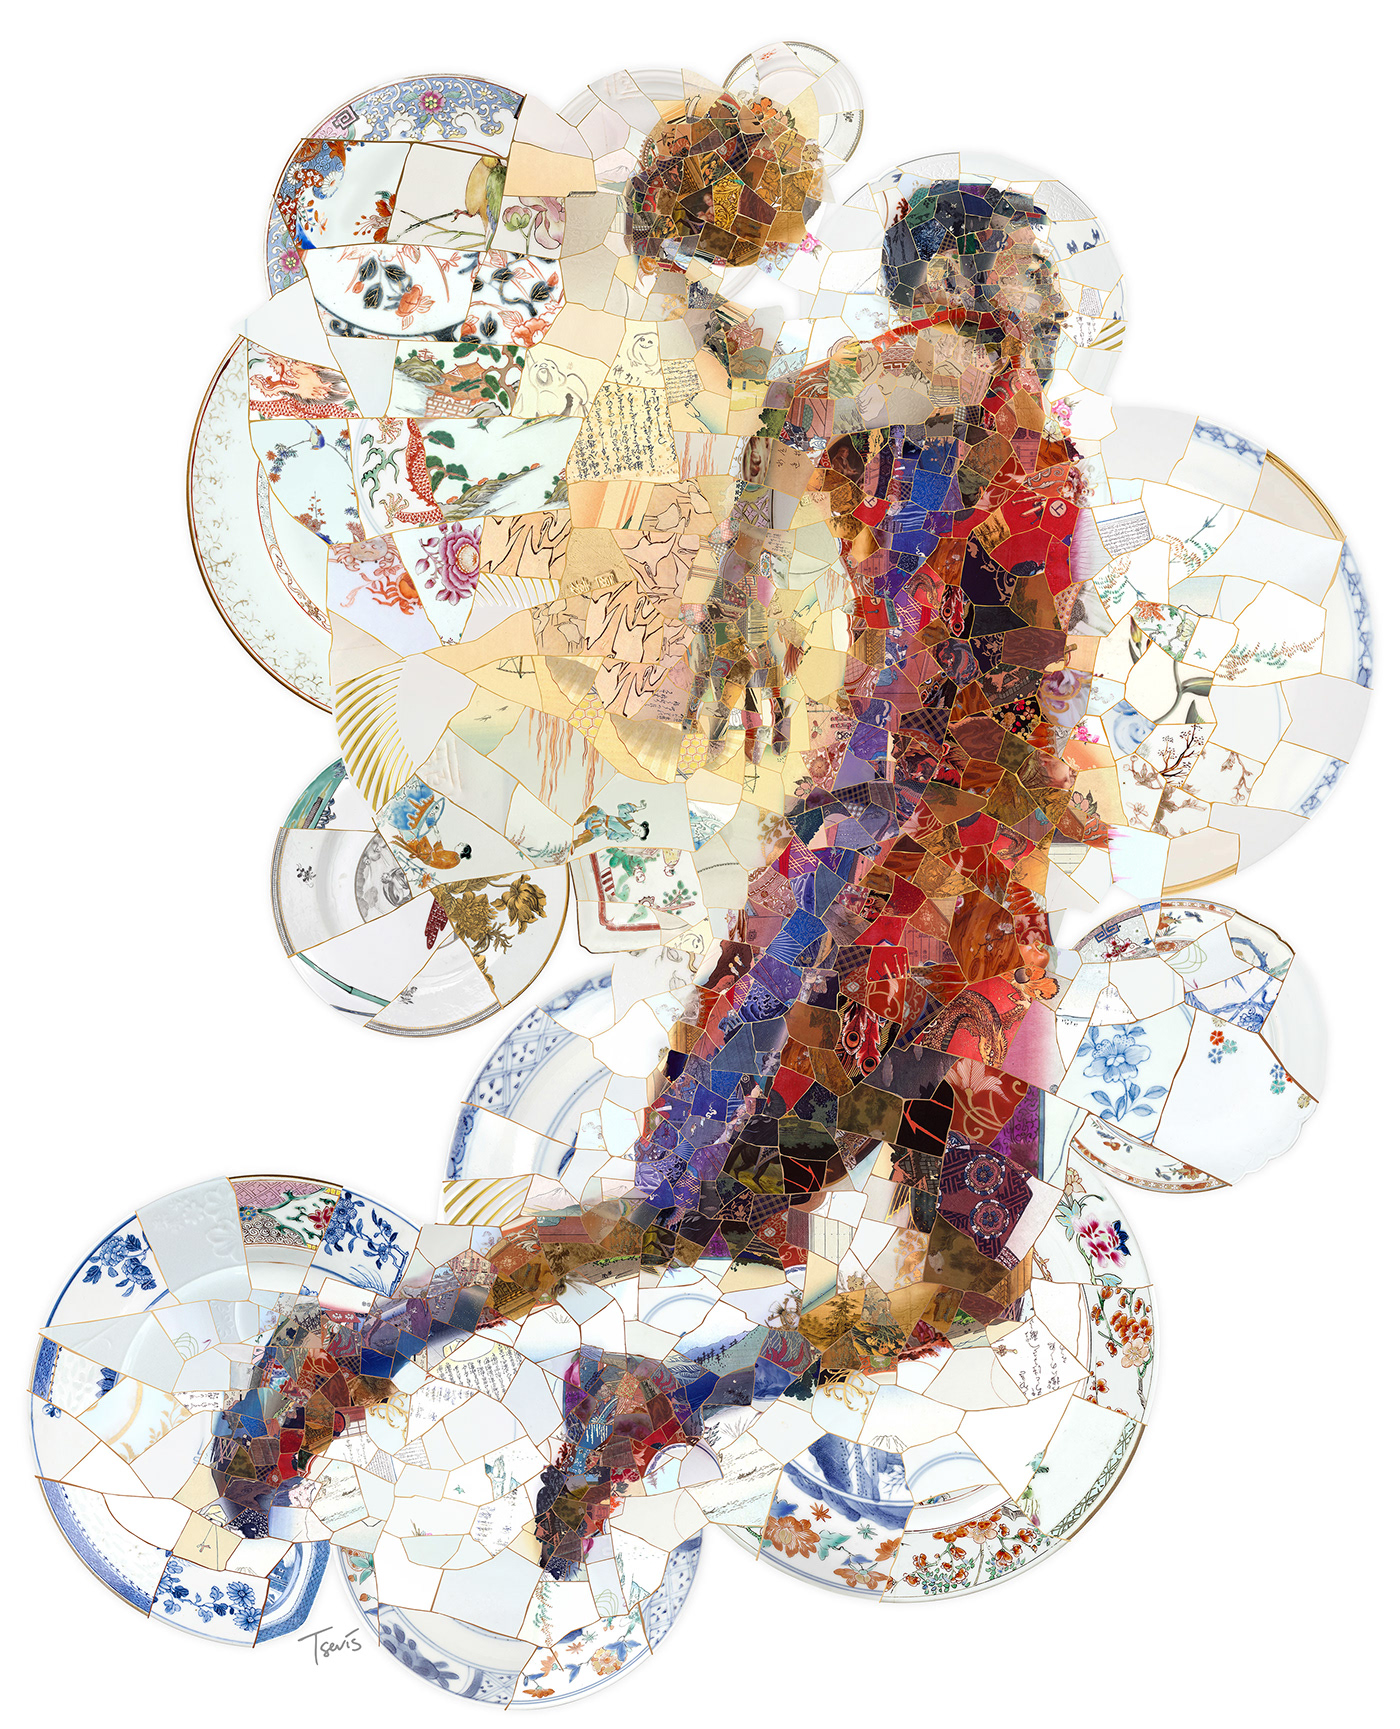 photomosaic photocollage collage mosaic Olympic Games sport illustration Tokyo2020 soccer athletics gymnastics